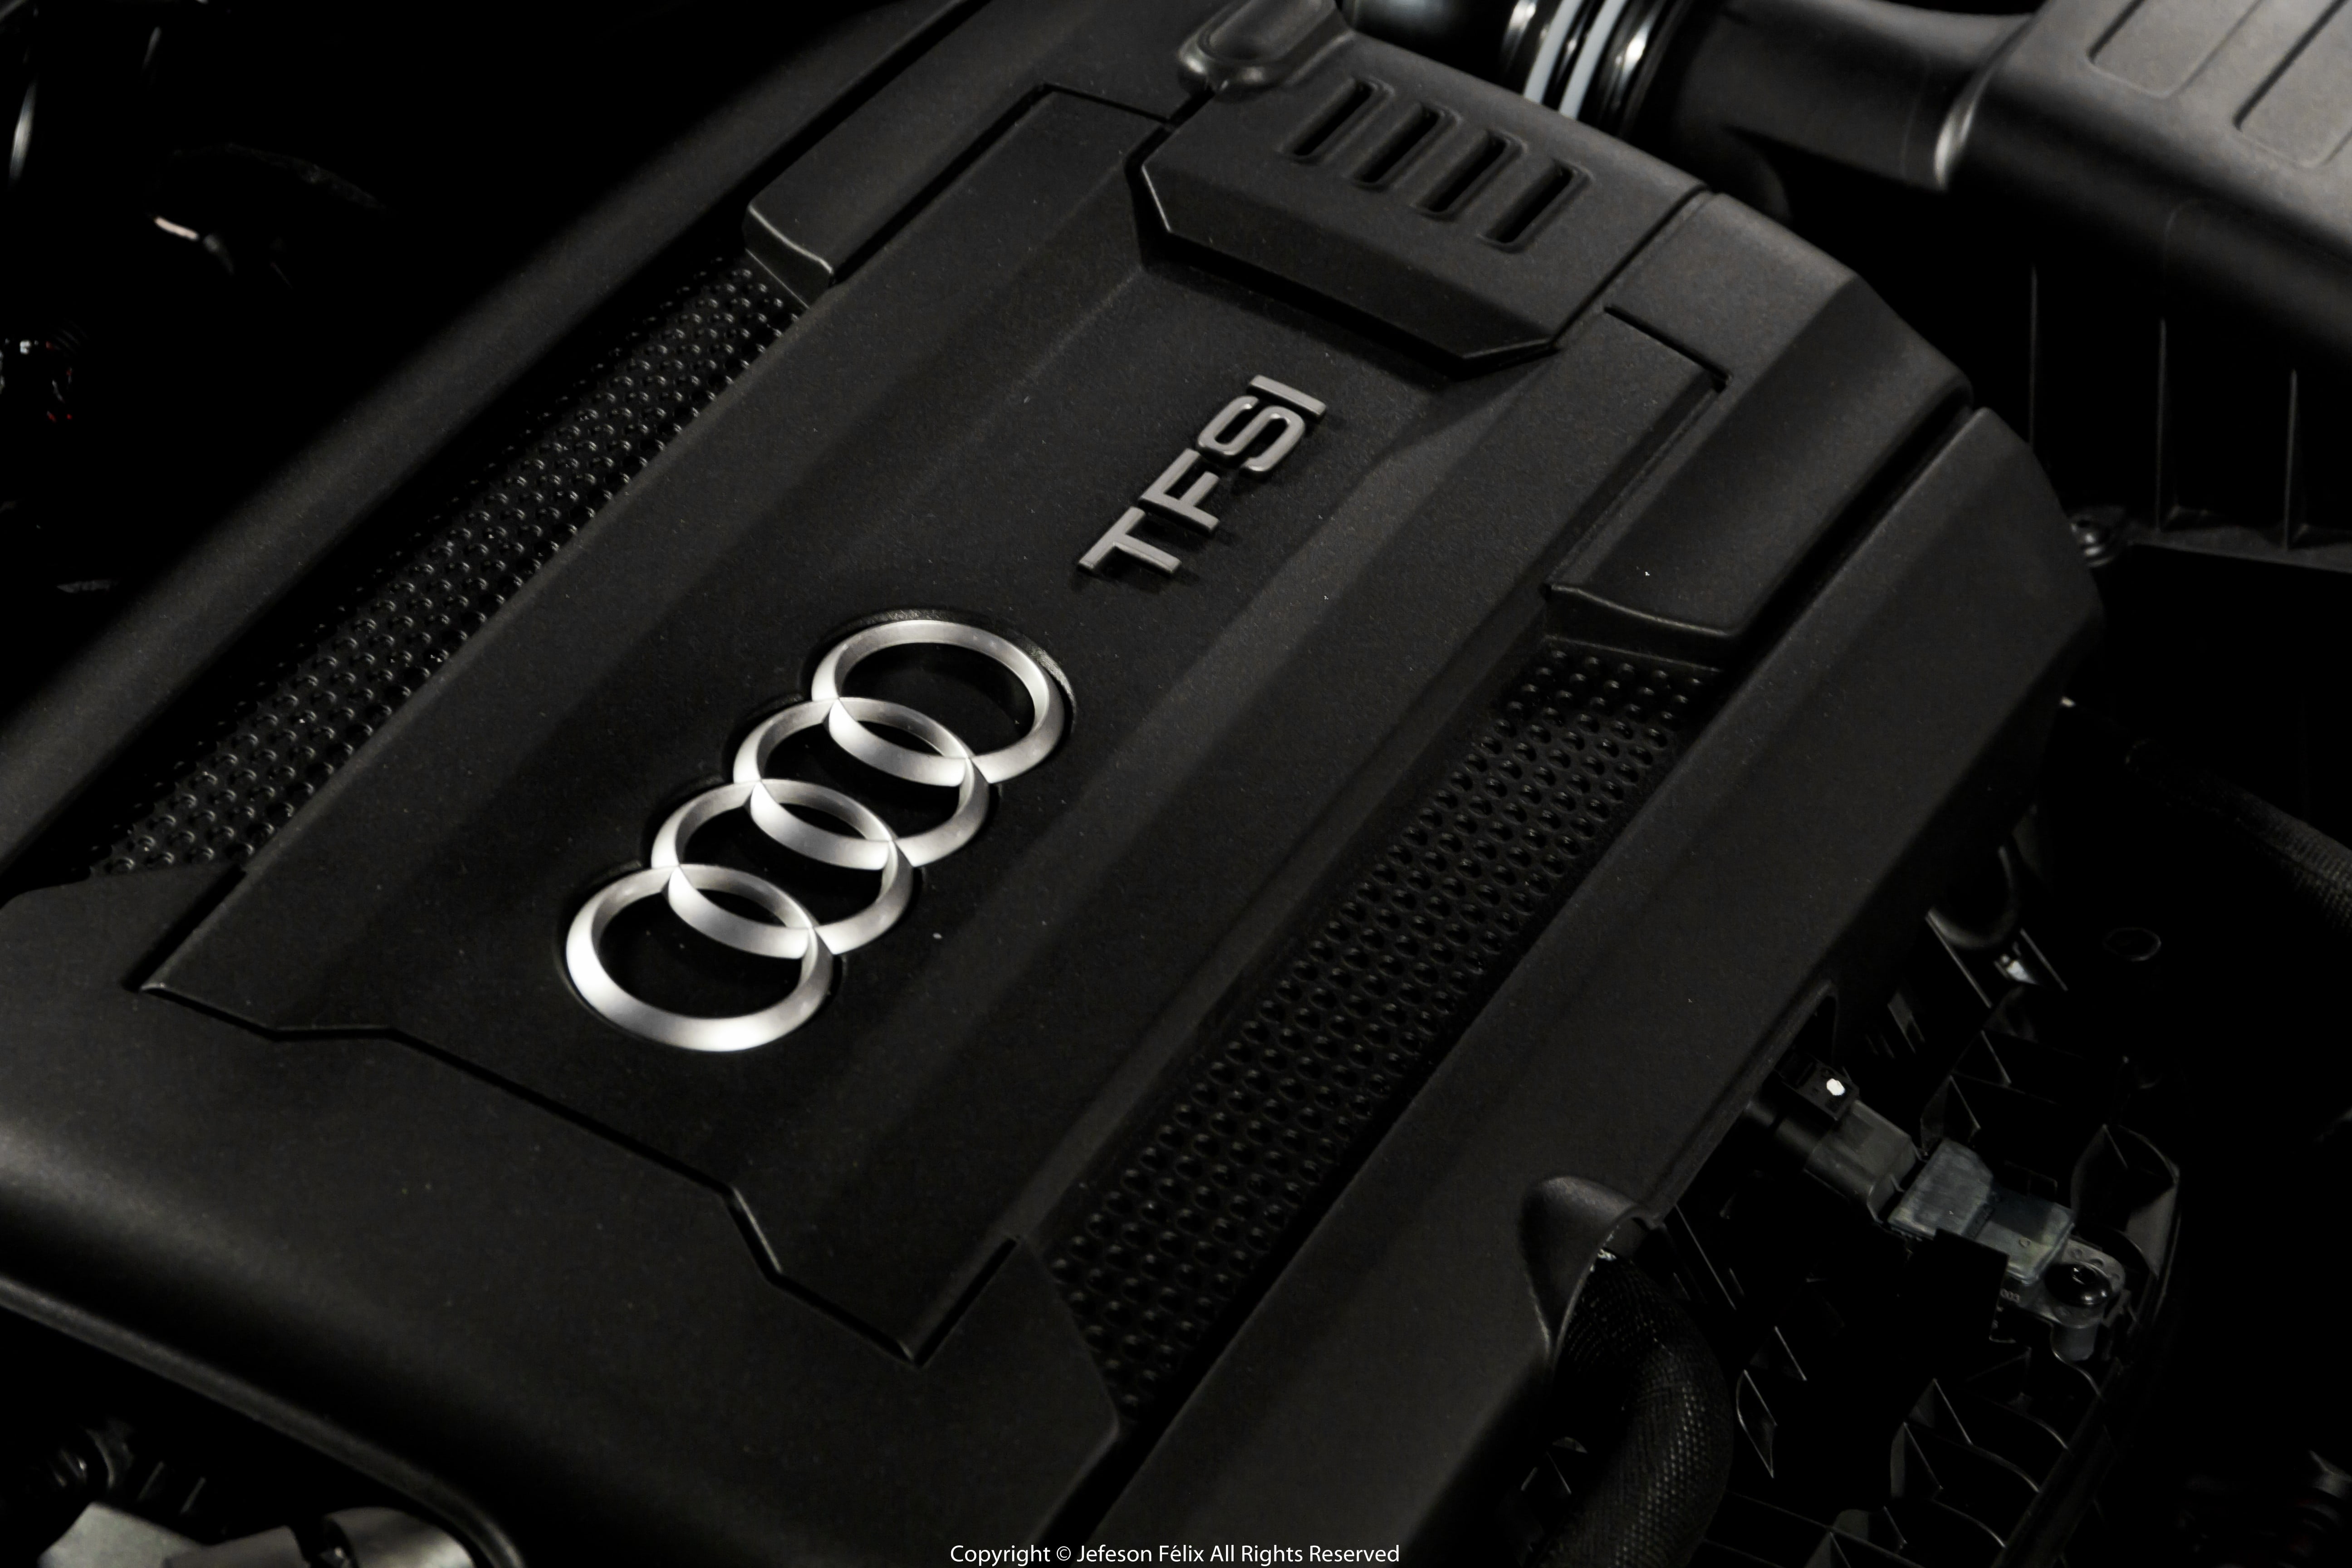 Audi TT, car, text, communication, technology, western script